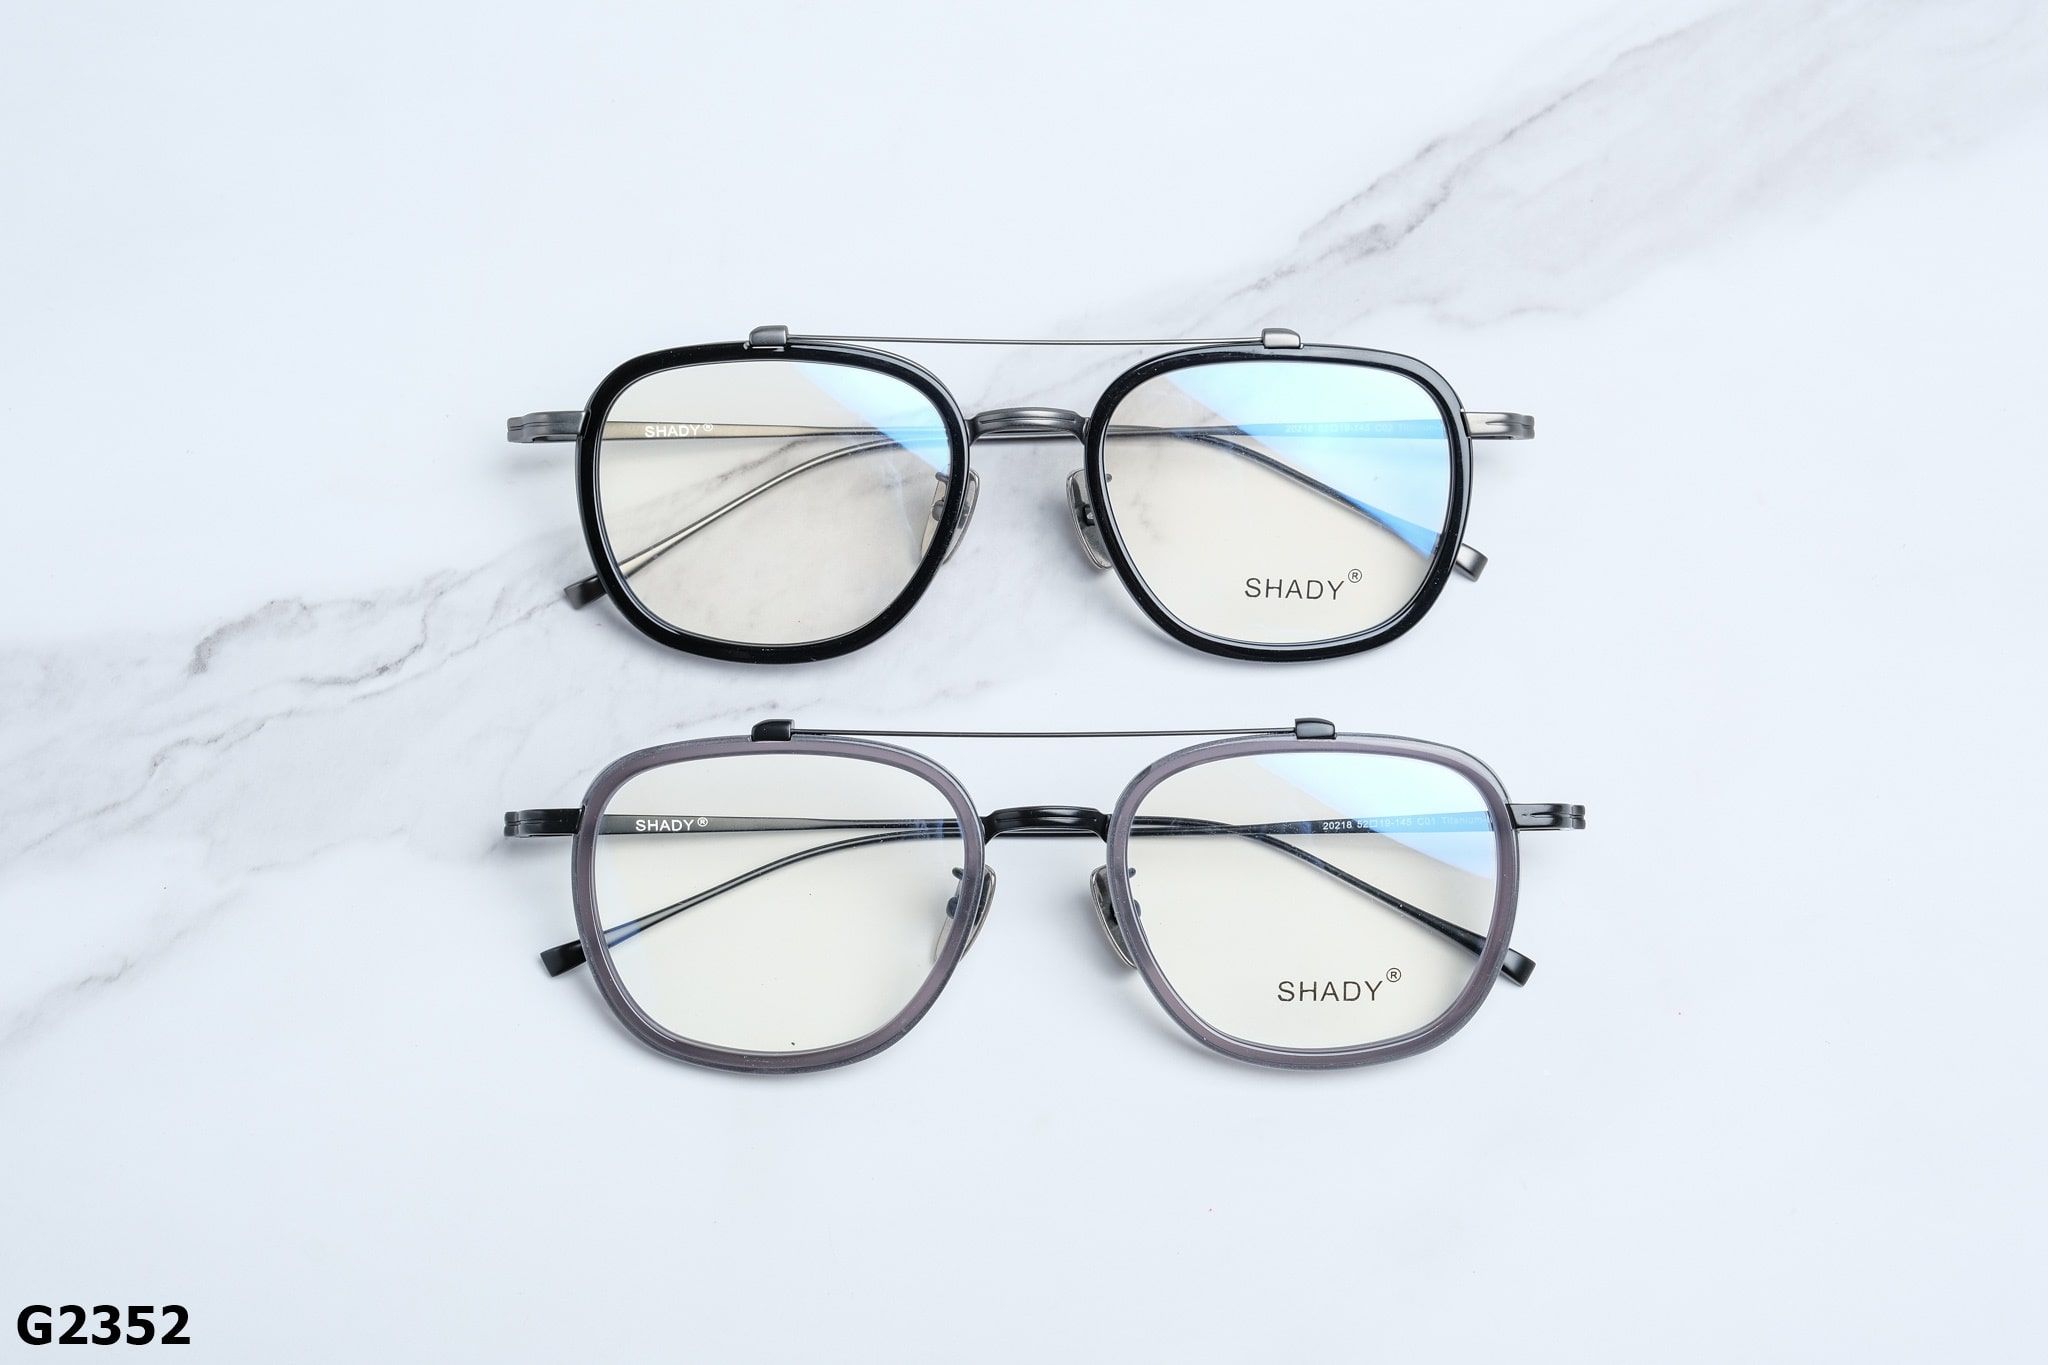  SHADY Eyewear - Glasses - G2352 